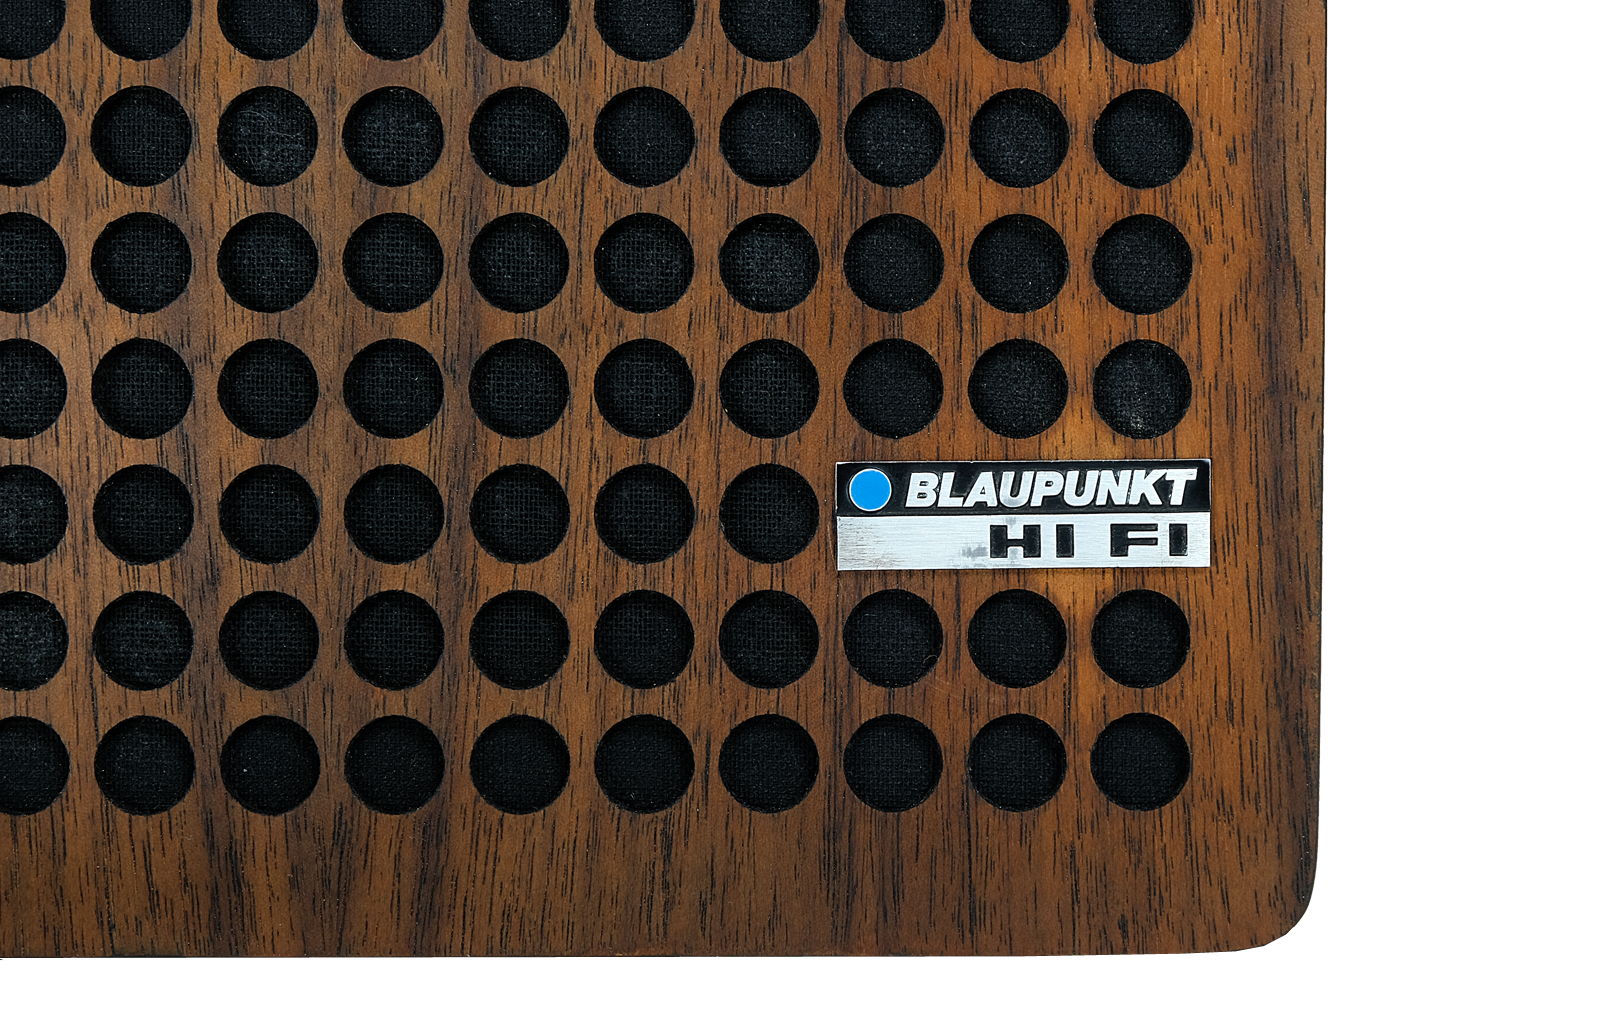 Blaupunkt LAB 308 speakers